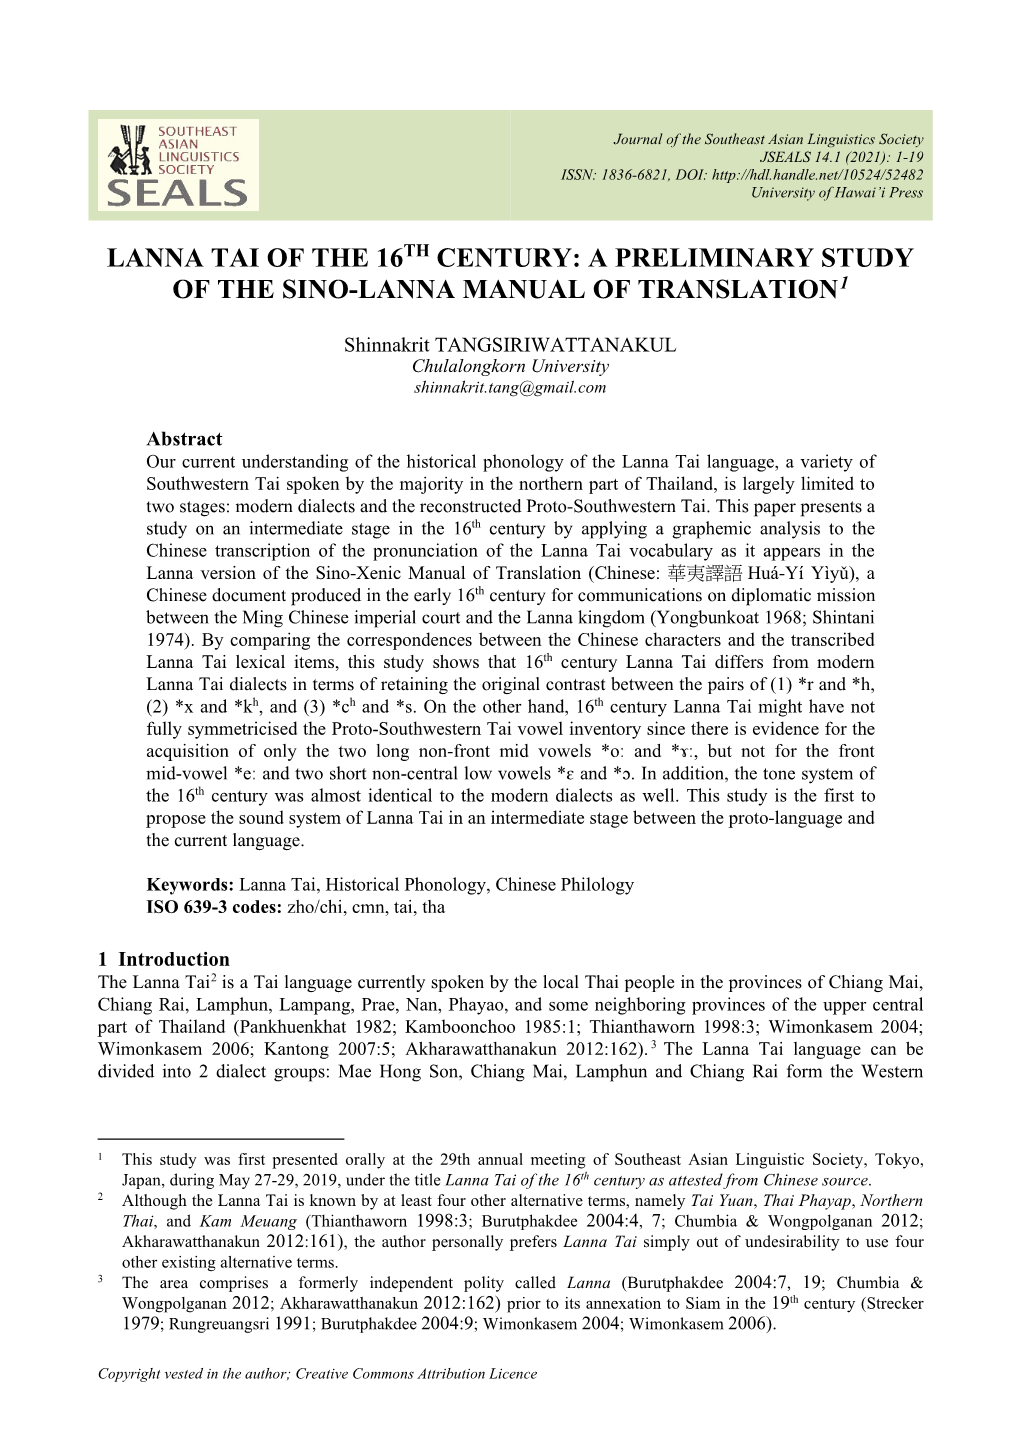 Lanna Tai of the 16Th Century: a Preliminary Study of the Sino-Lanna Manual of Translation1